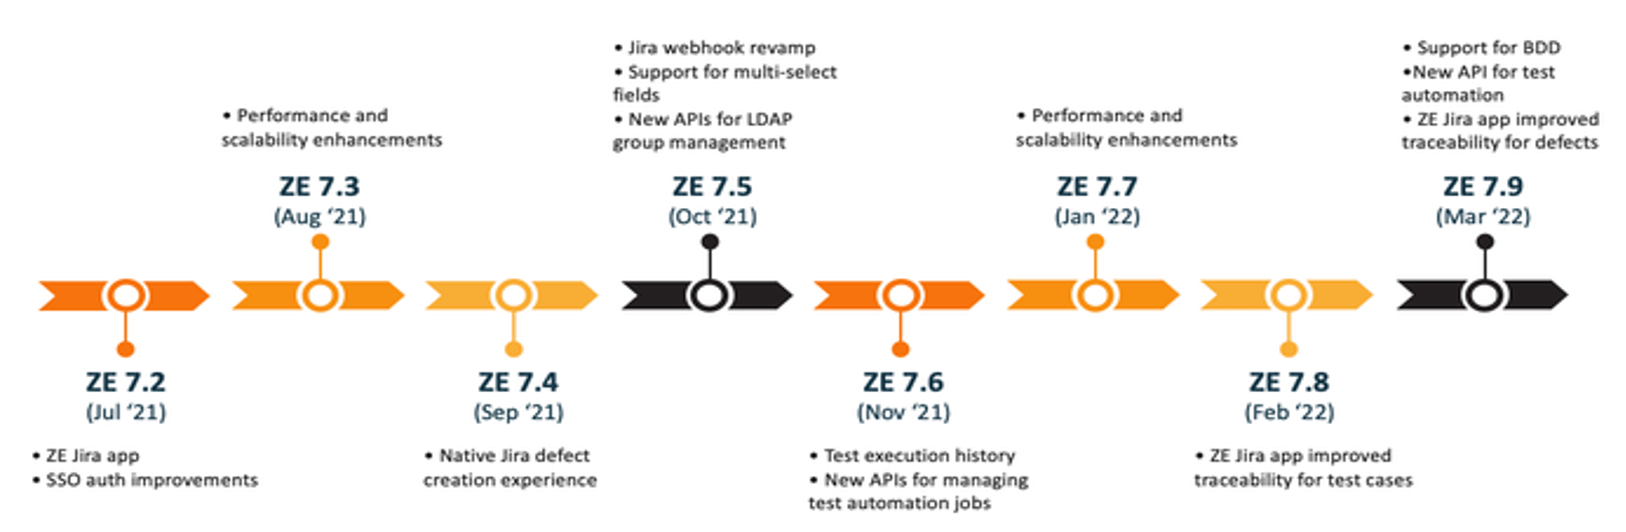 Figure 1: Recent Zephyr Enterprise Releases